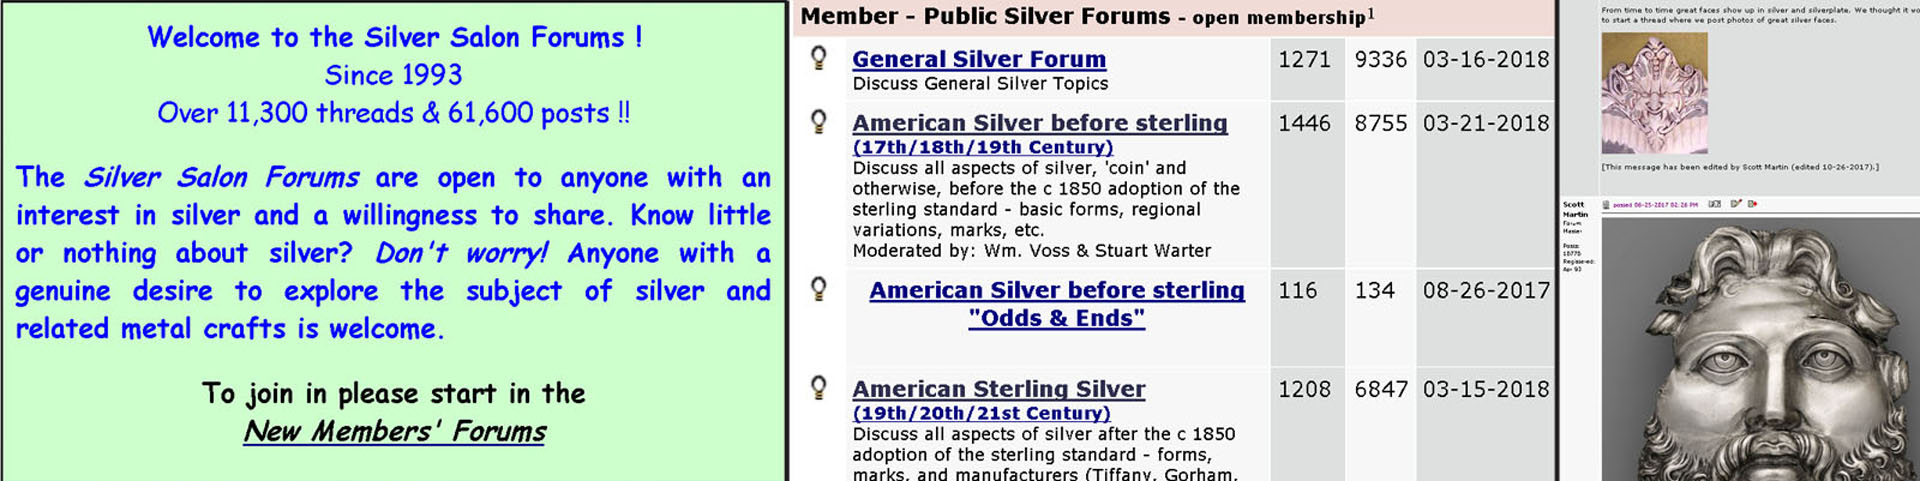 Silver Salon Forums